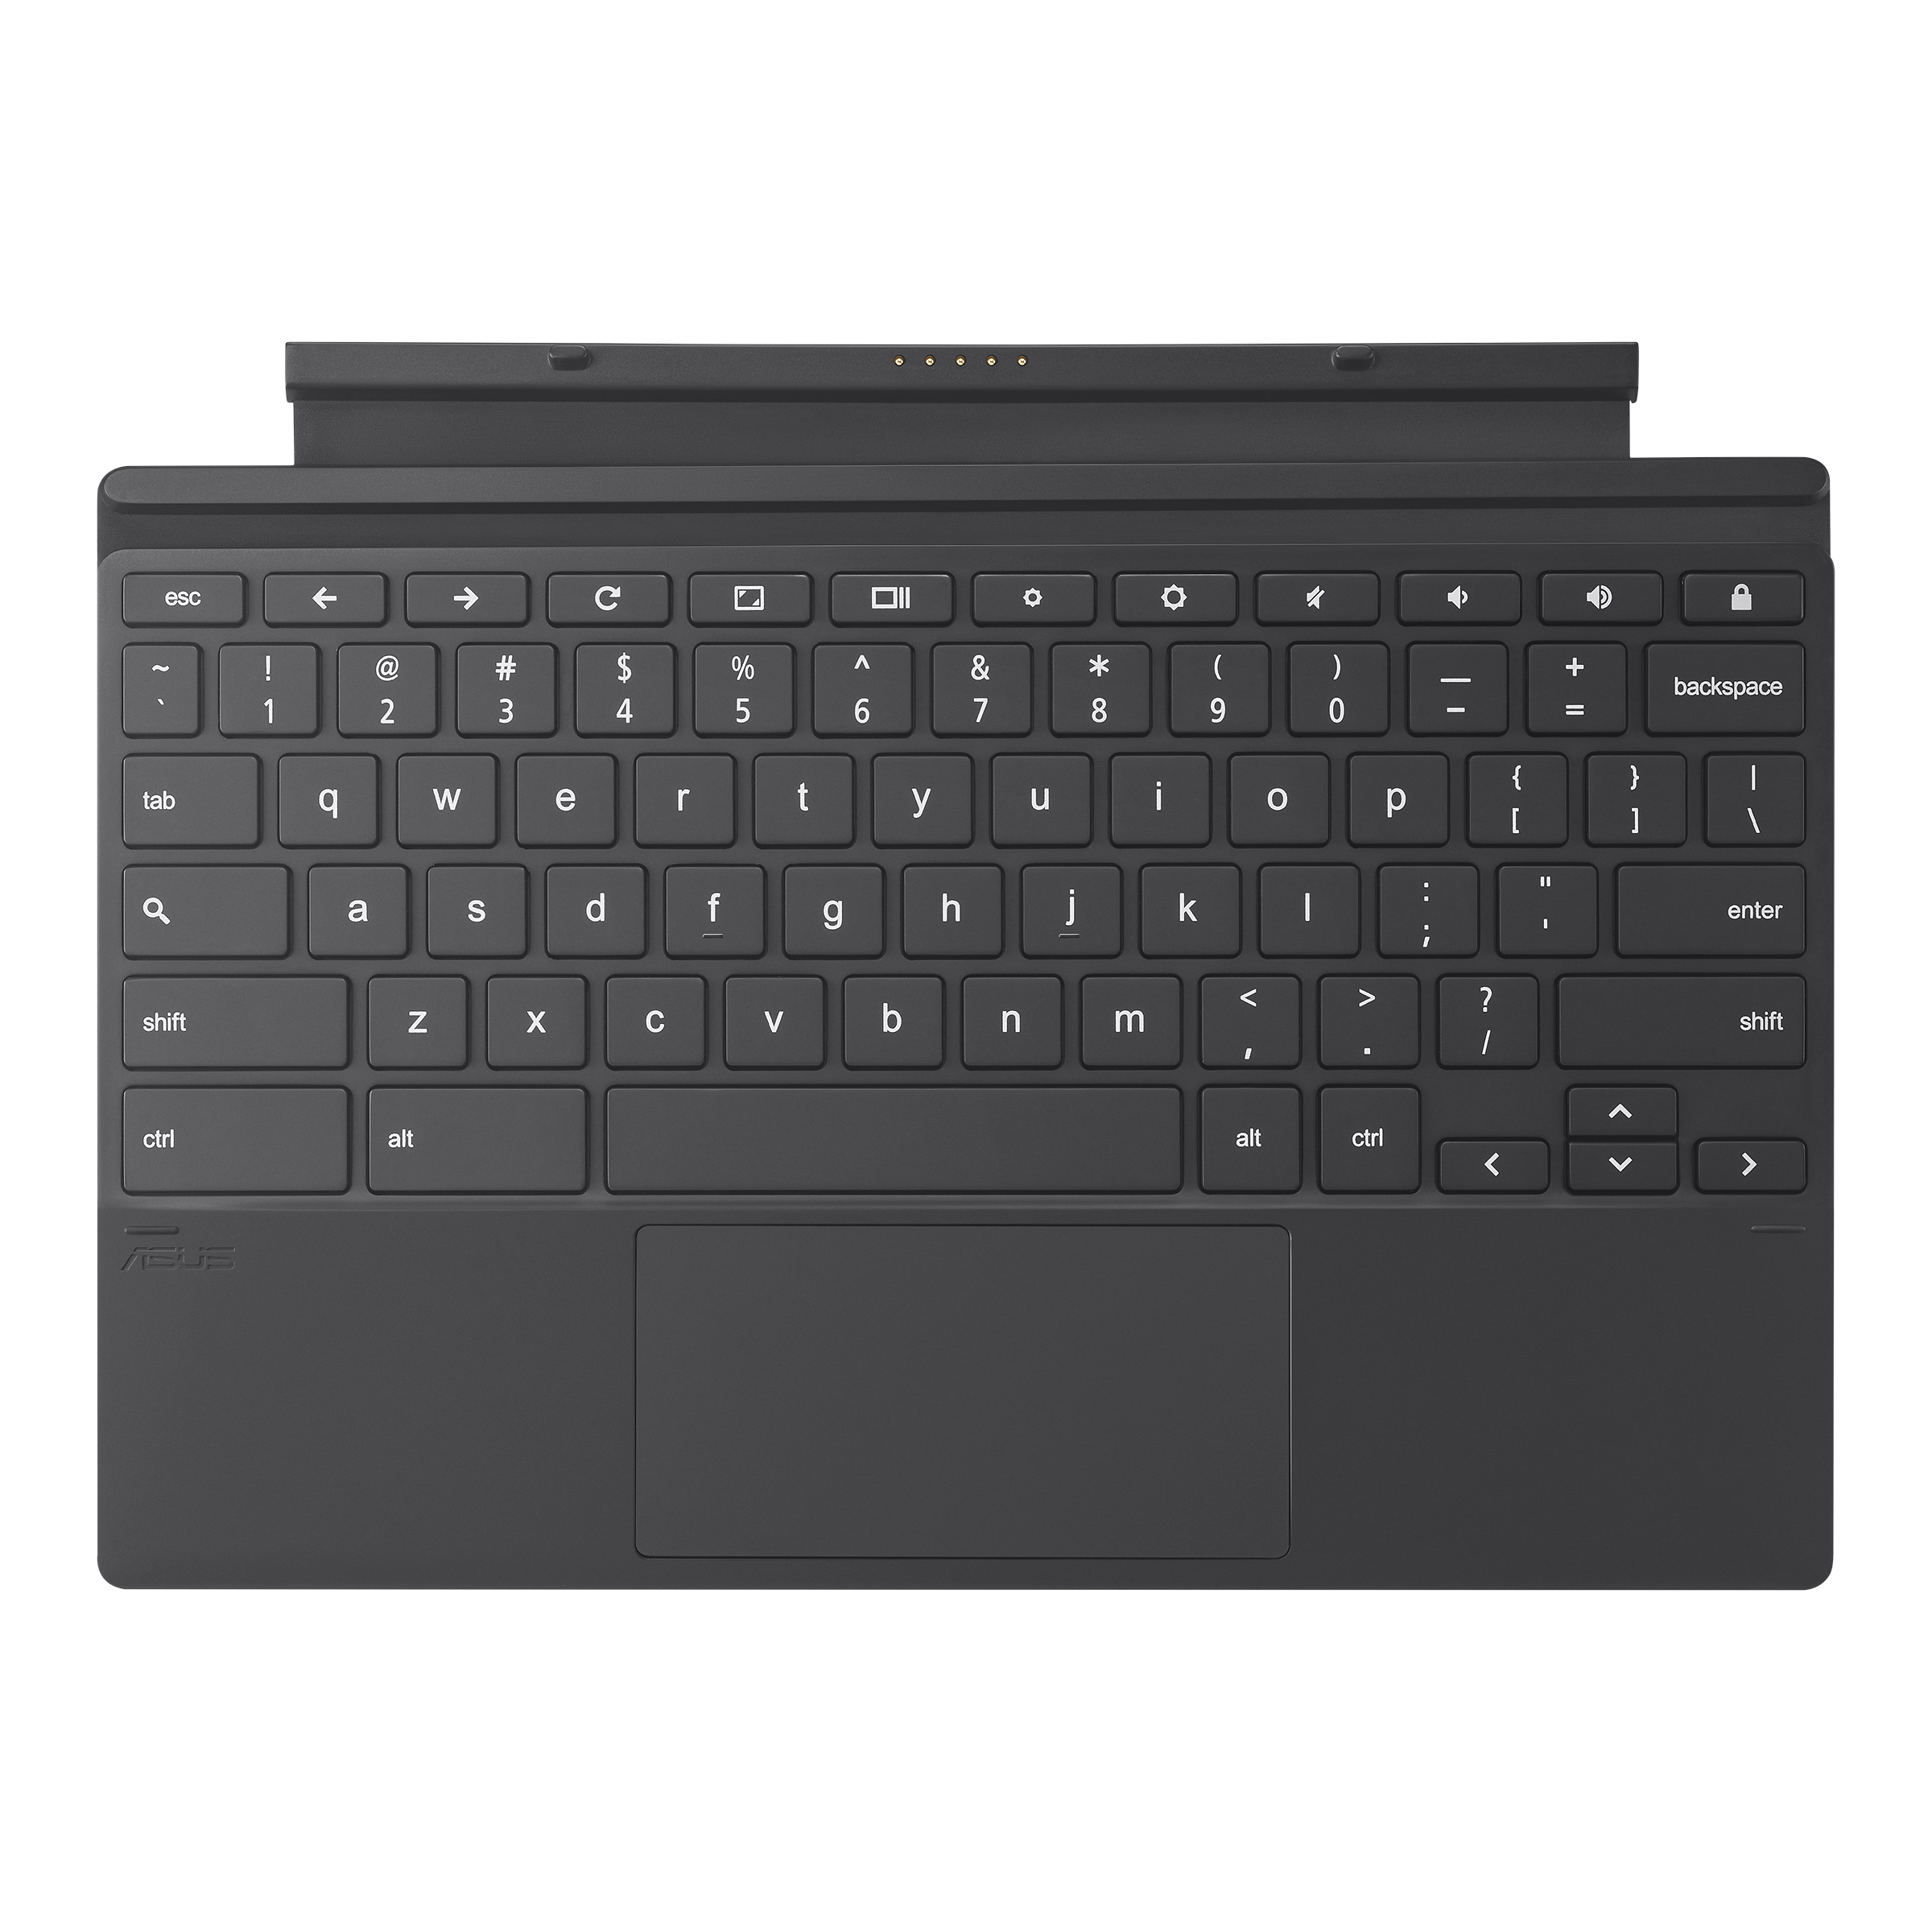 ASUS Chromebook Detachable CM3 CM3000｜Laptops For Home｜ASUS USA